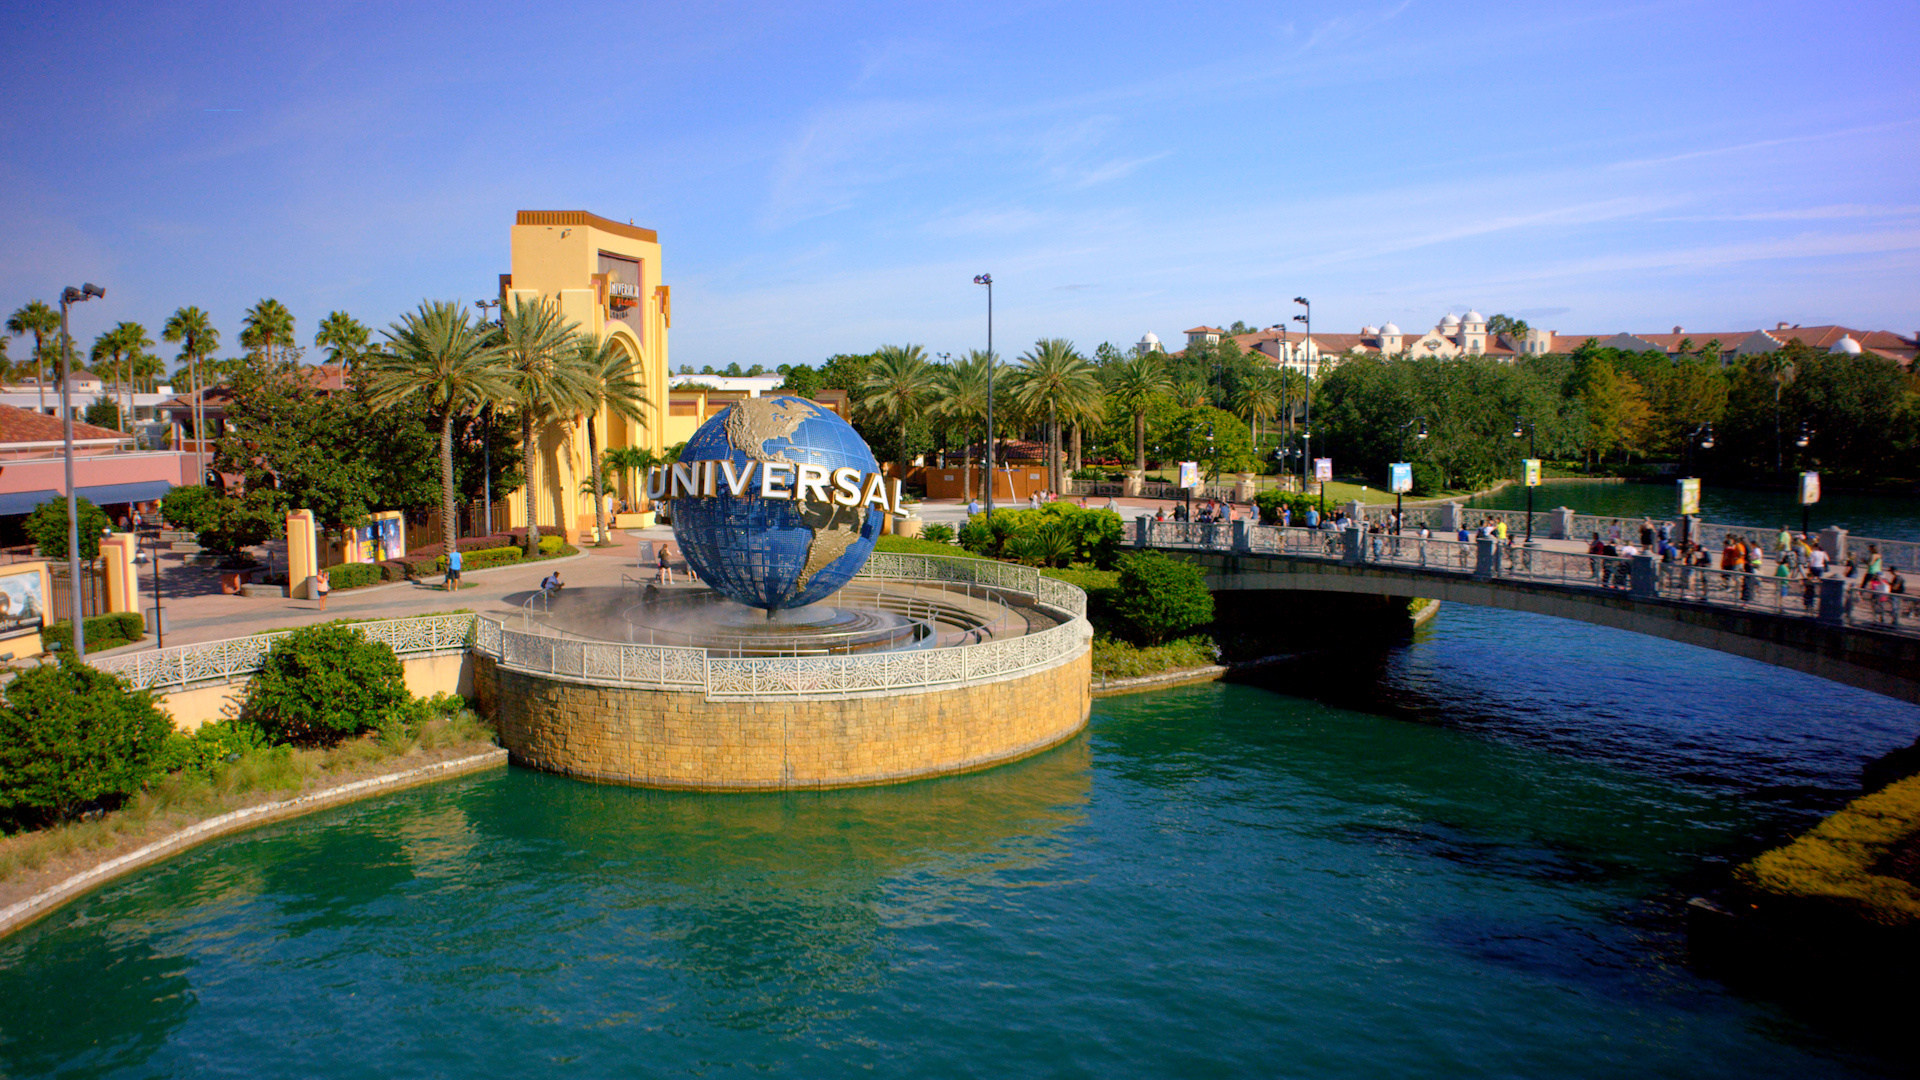 Universal Studios Hollywood, BOGO offer, Florida residents, Limited time promotion, 1920x1080 Full HD Desktop